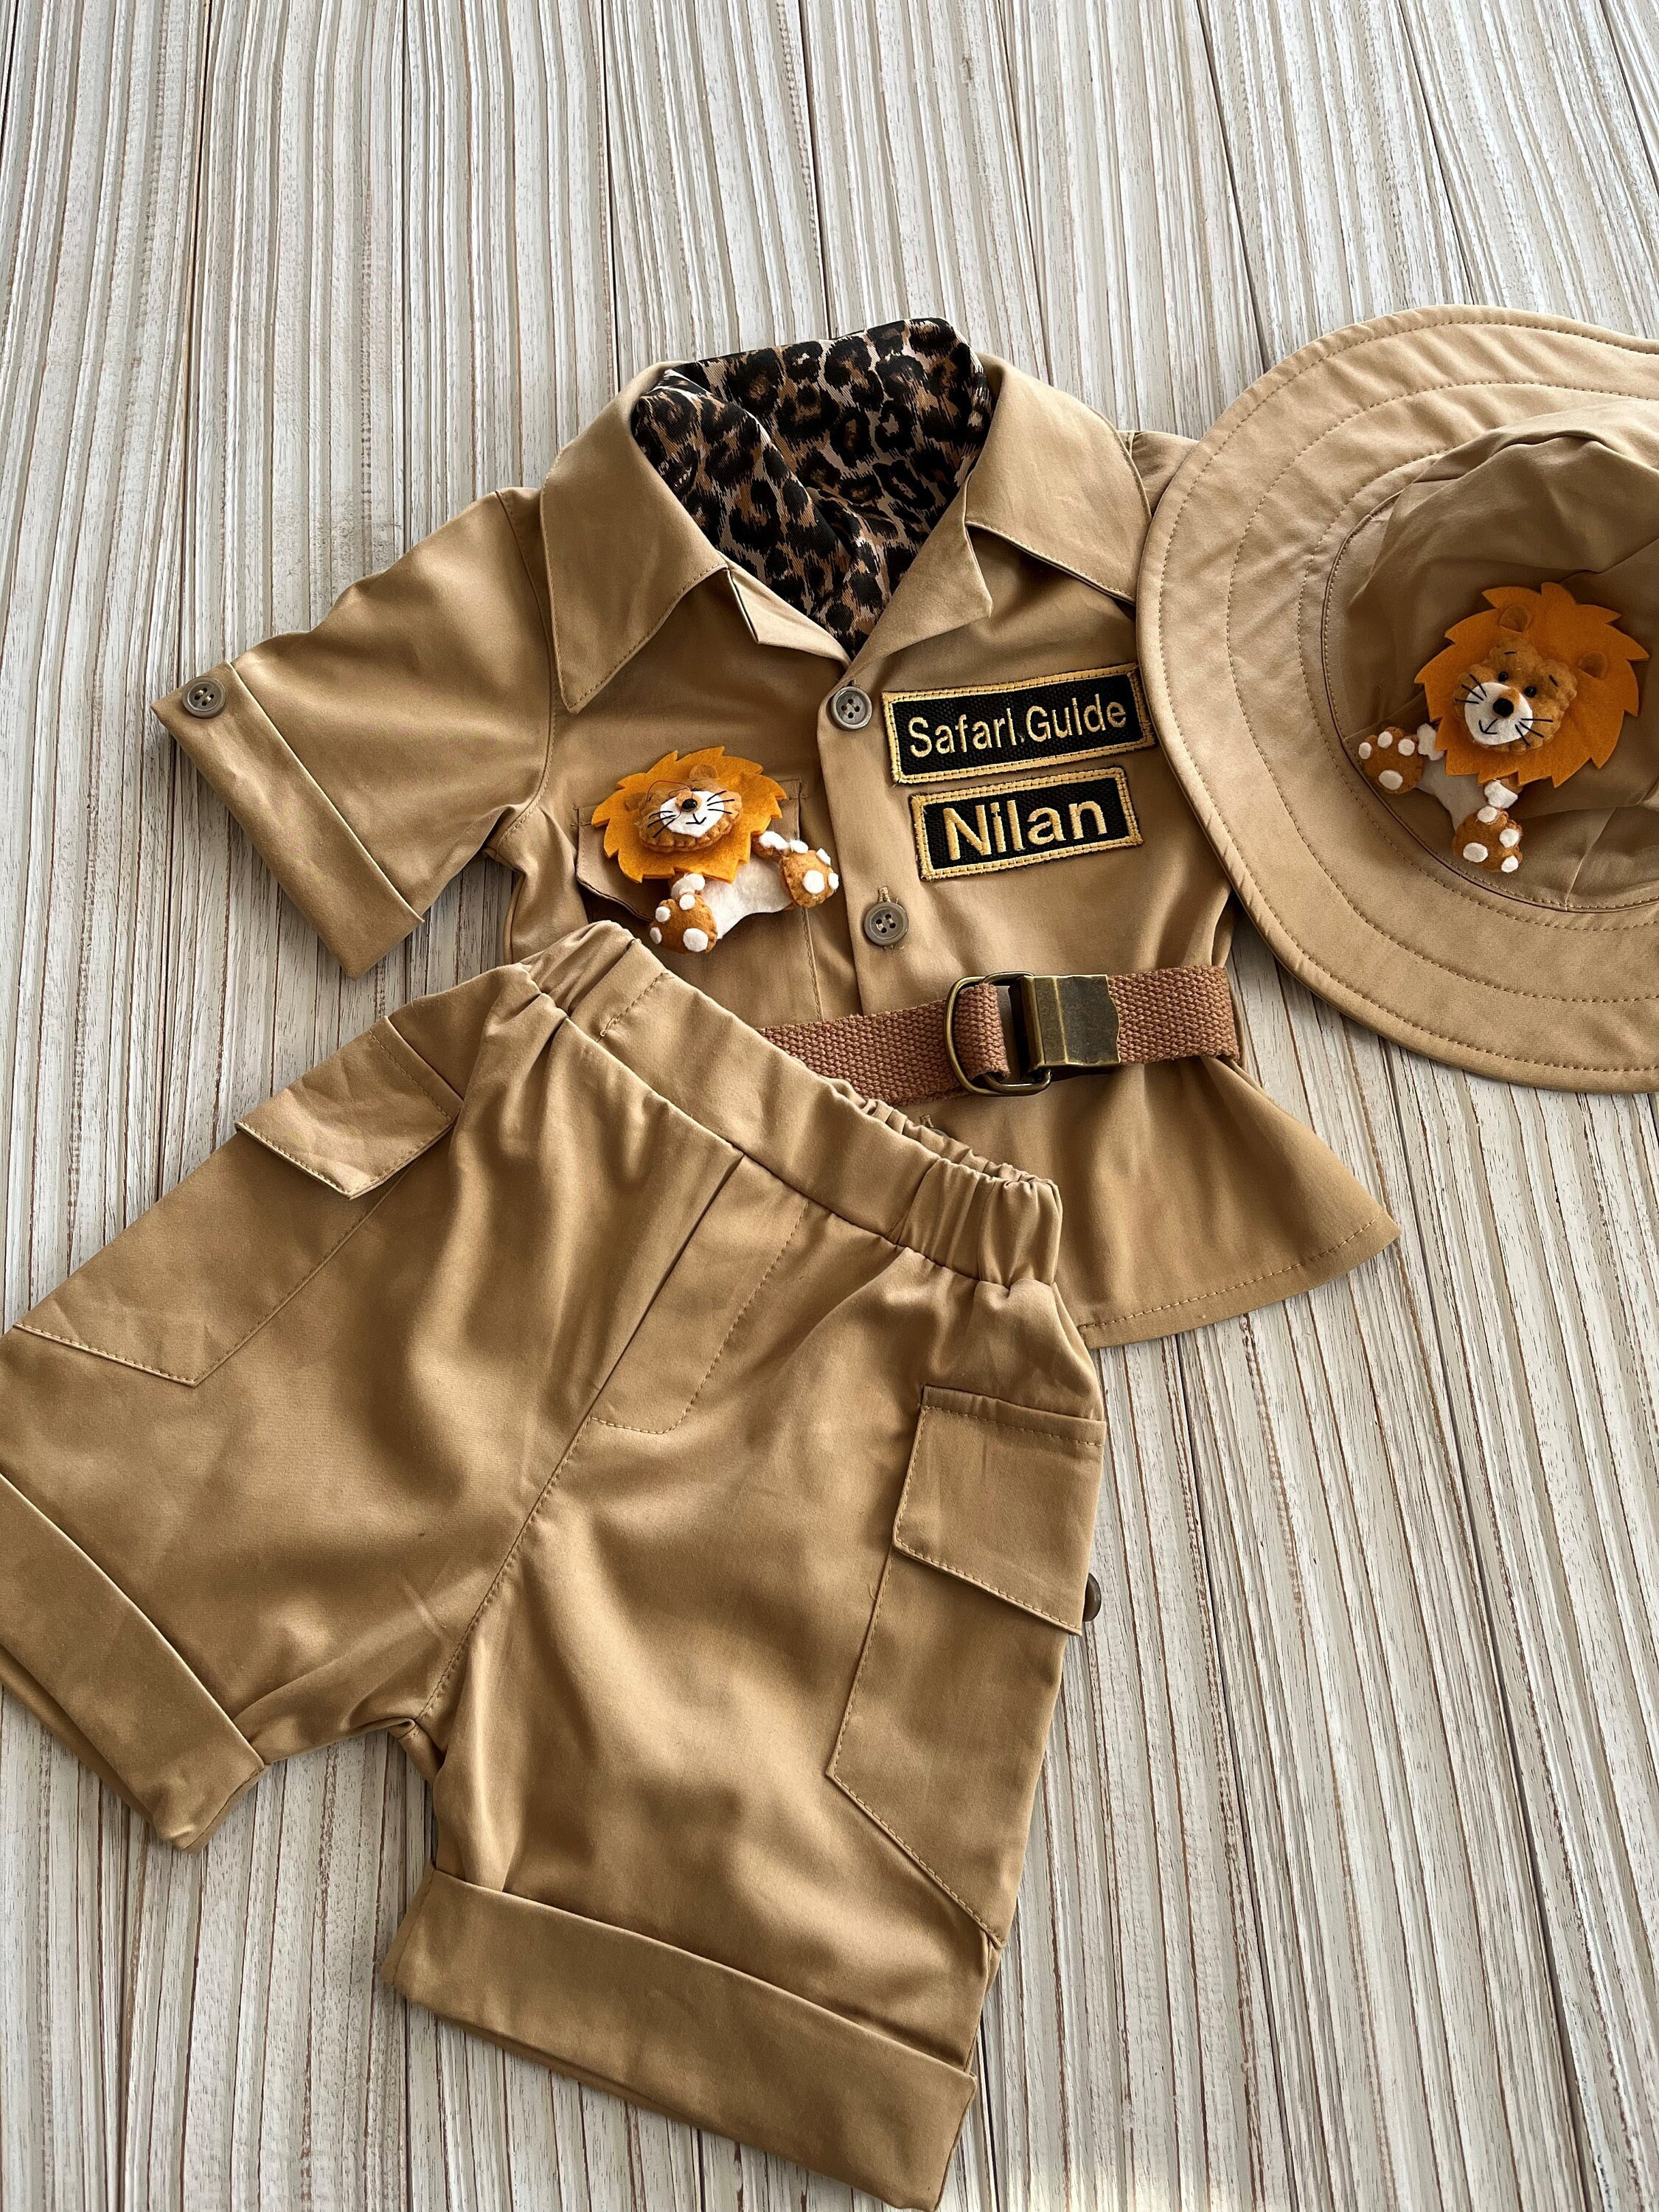 Buigen Kolibrie min Personalized African Adventure Brown Safari Kids Outfit 2 - Etsy